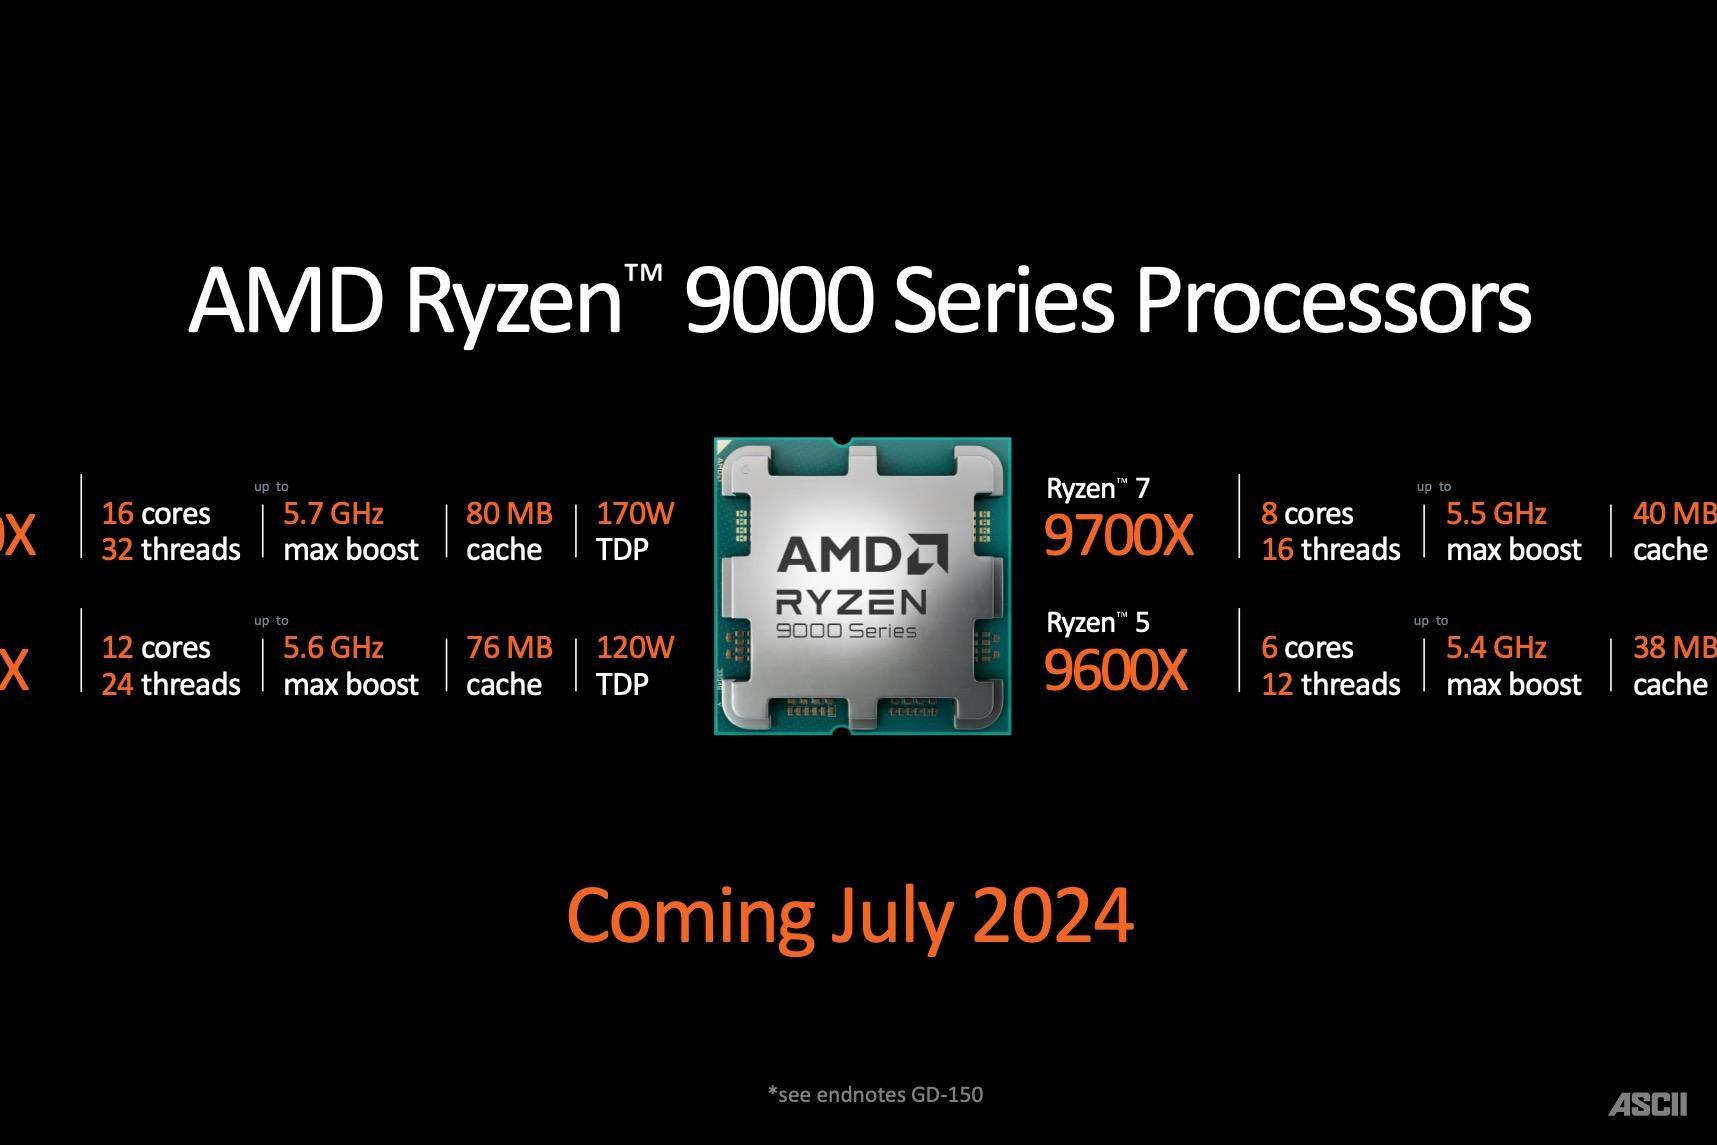 AMD「Ryzen 9000シリーズ」発売延期　初期ロットに問題